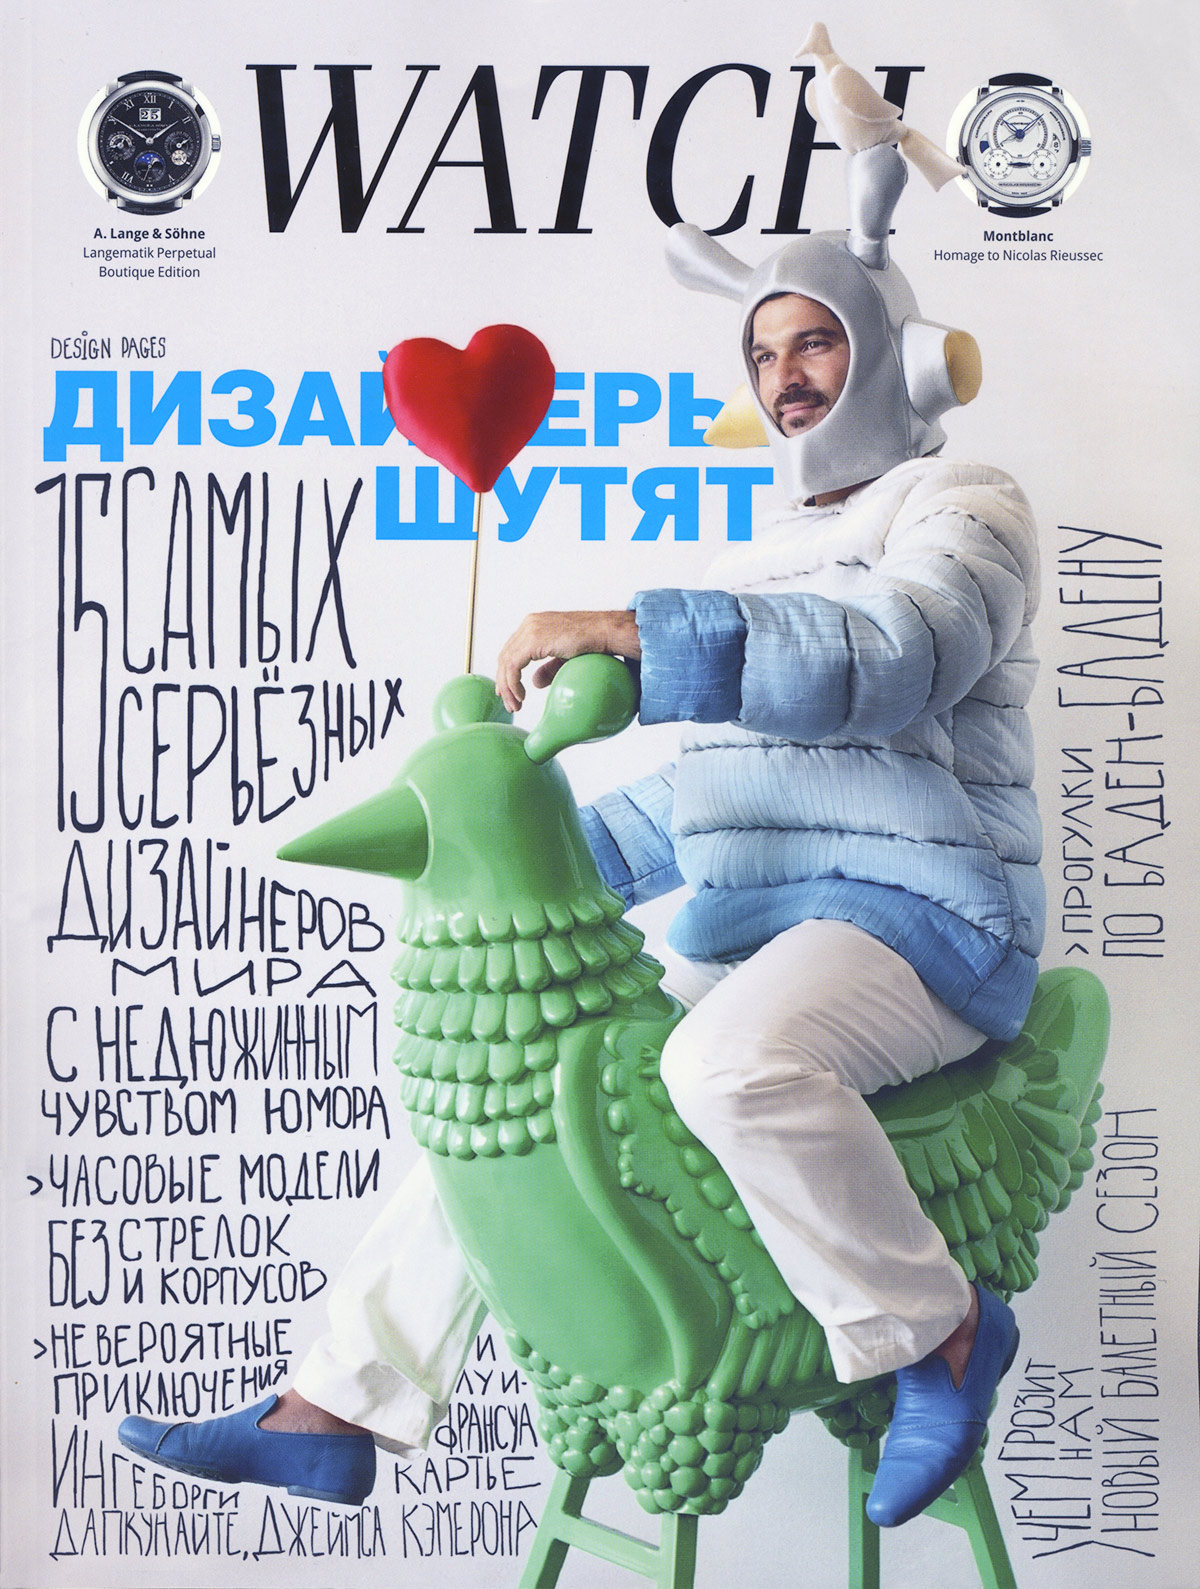 Watch Magazine 2014